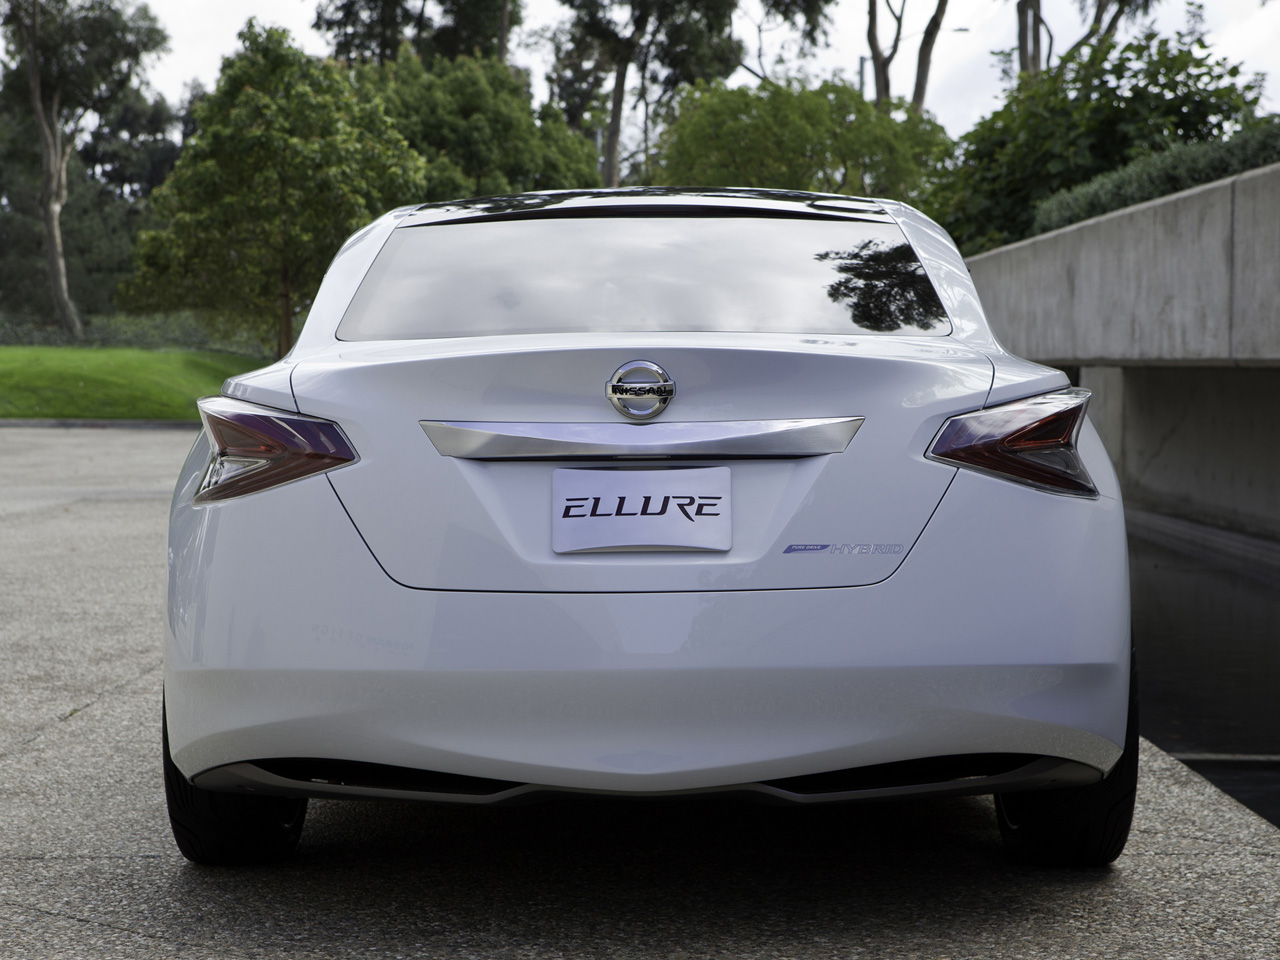 Amazing Nissan Ellure Concept Pictures & Backgrounds